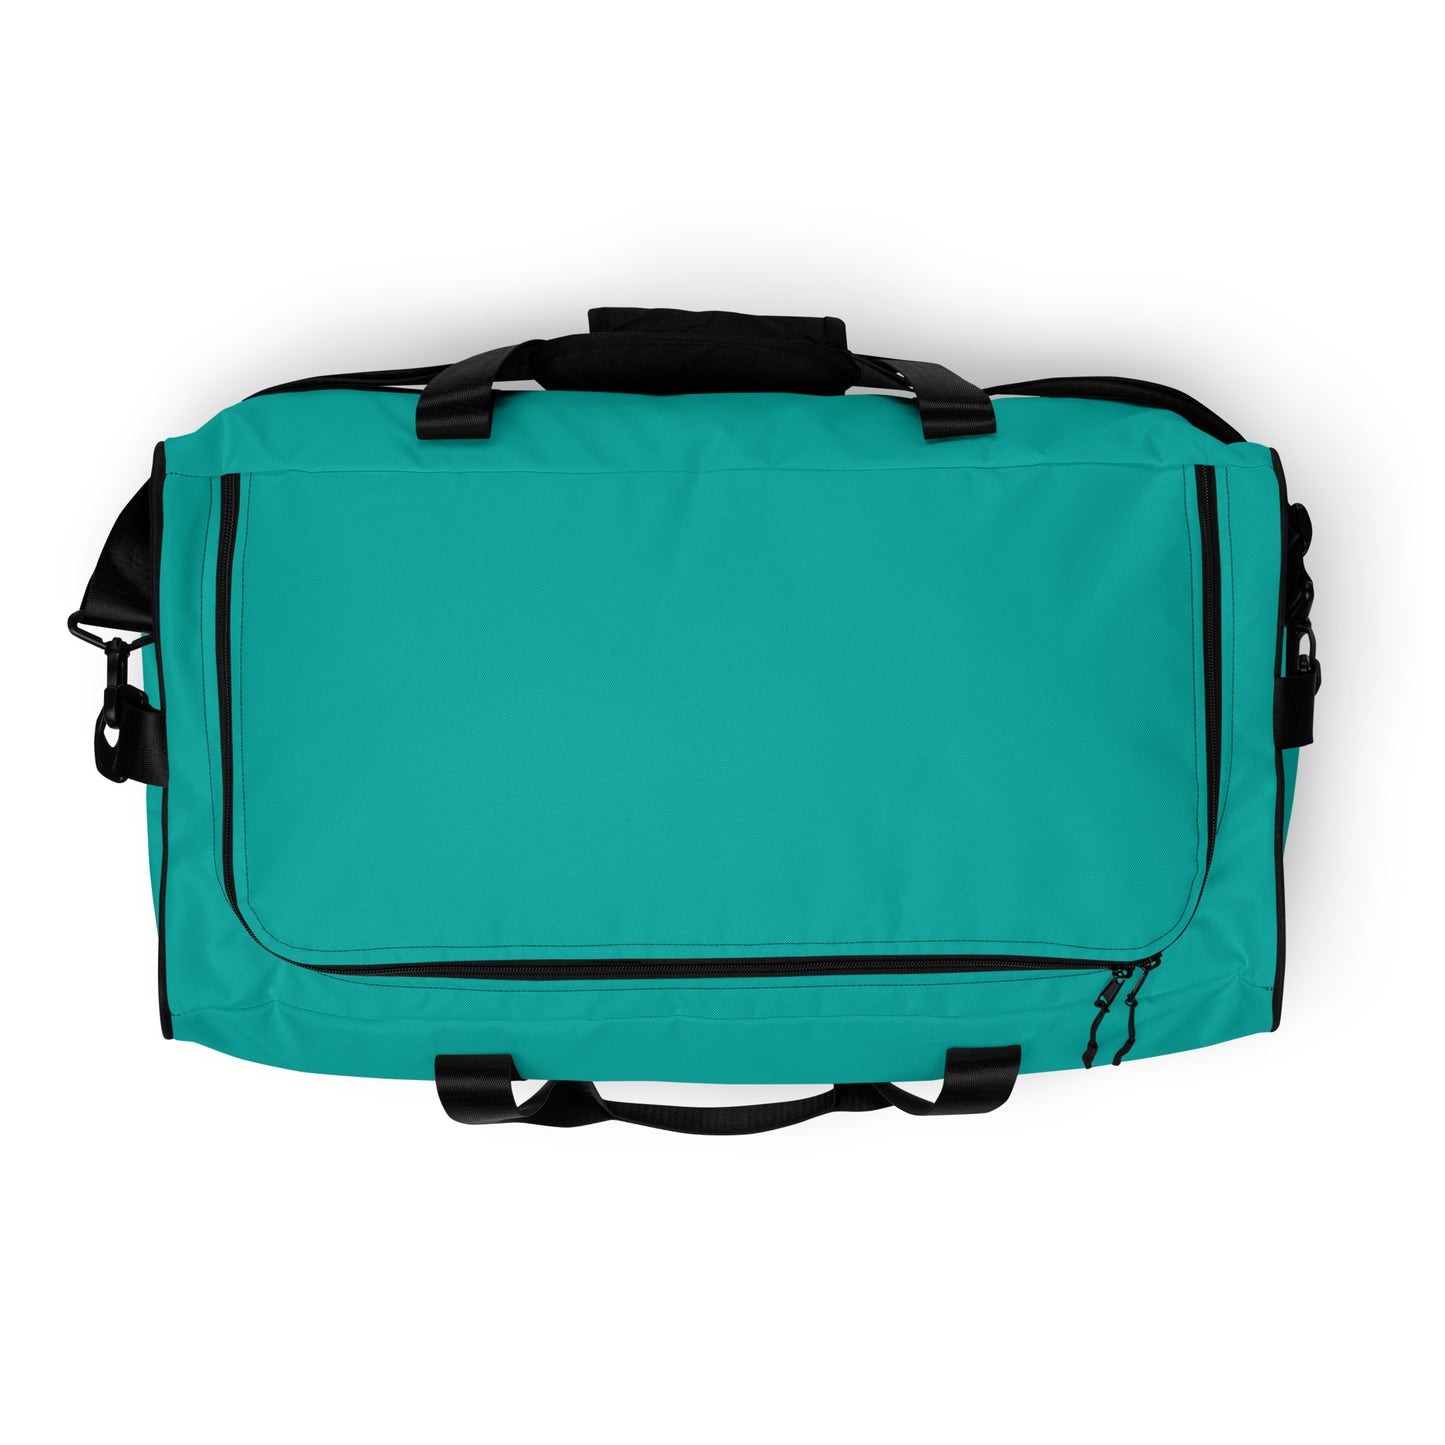 Colored Duffle bag